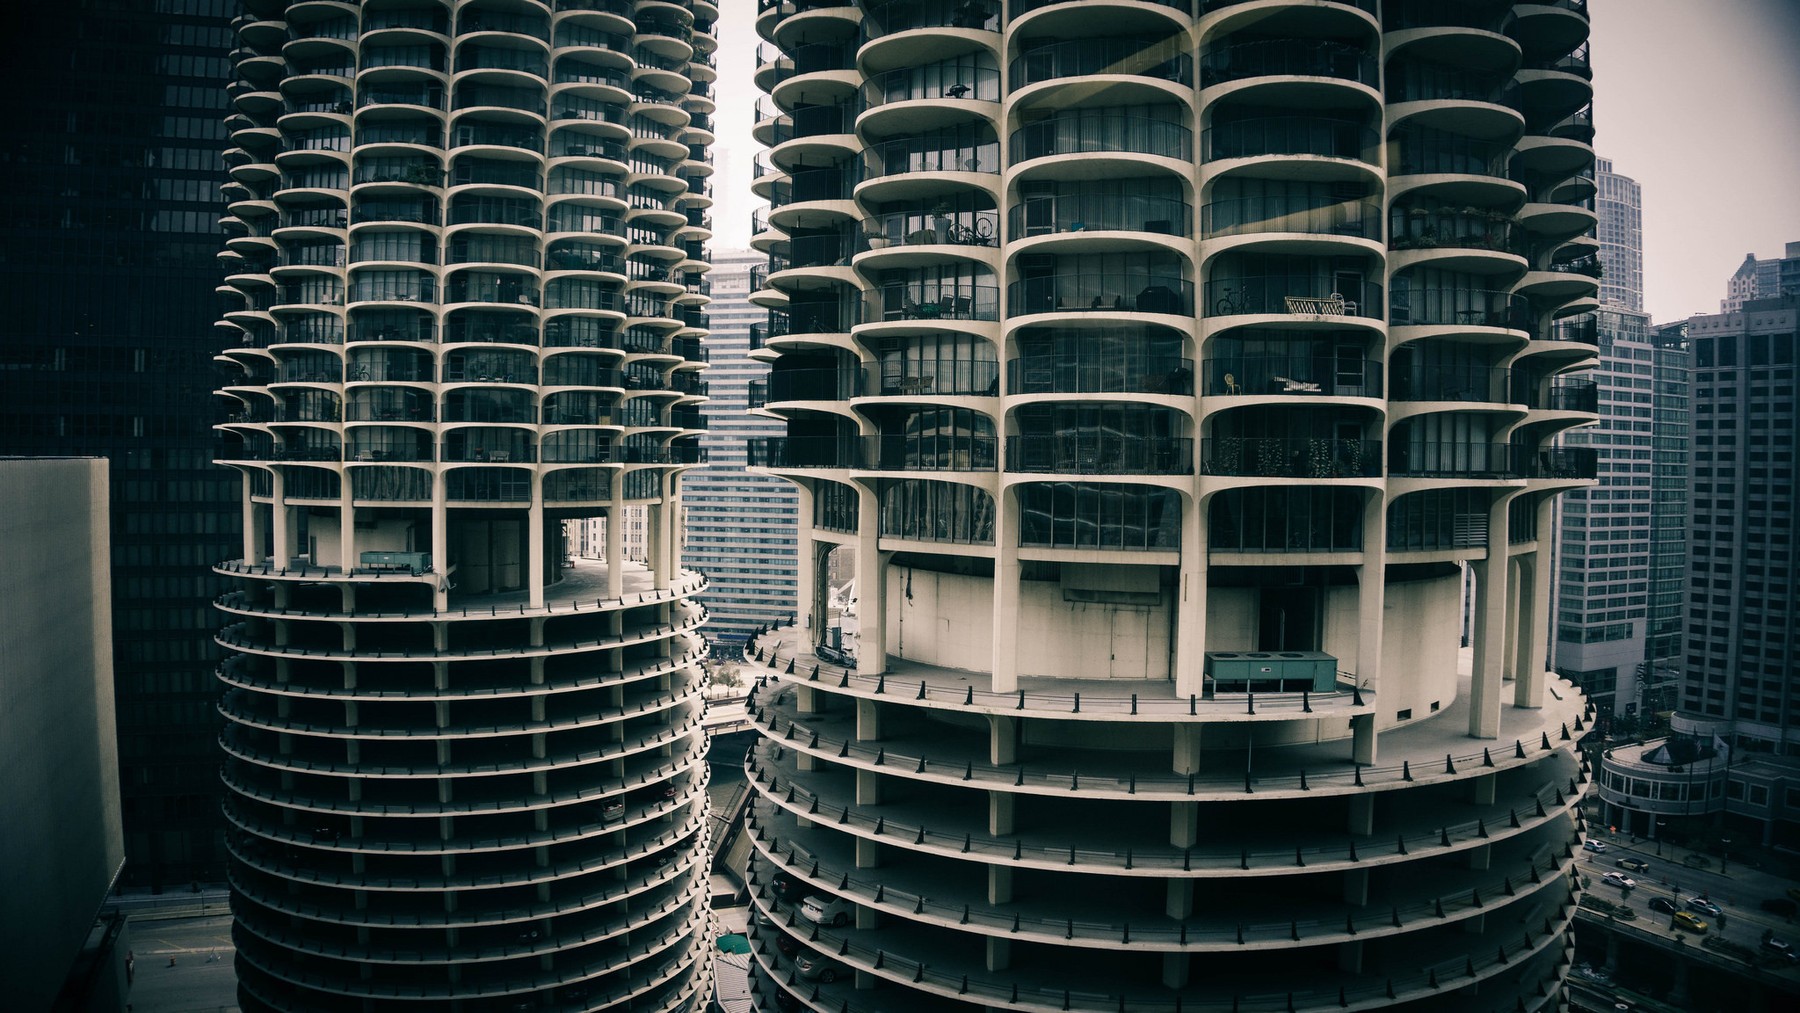 Marina City, Chicago, IL | Jeffrey Zeldman | Flickr